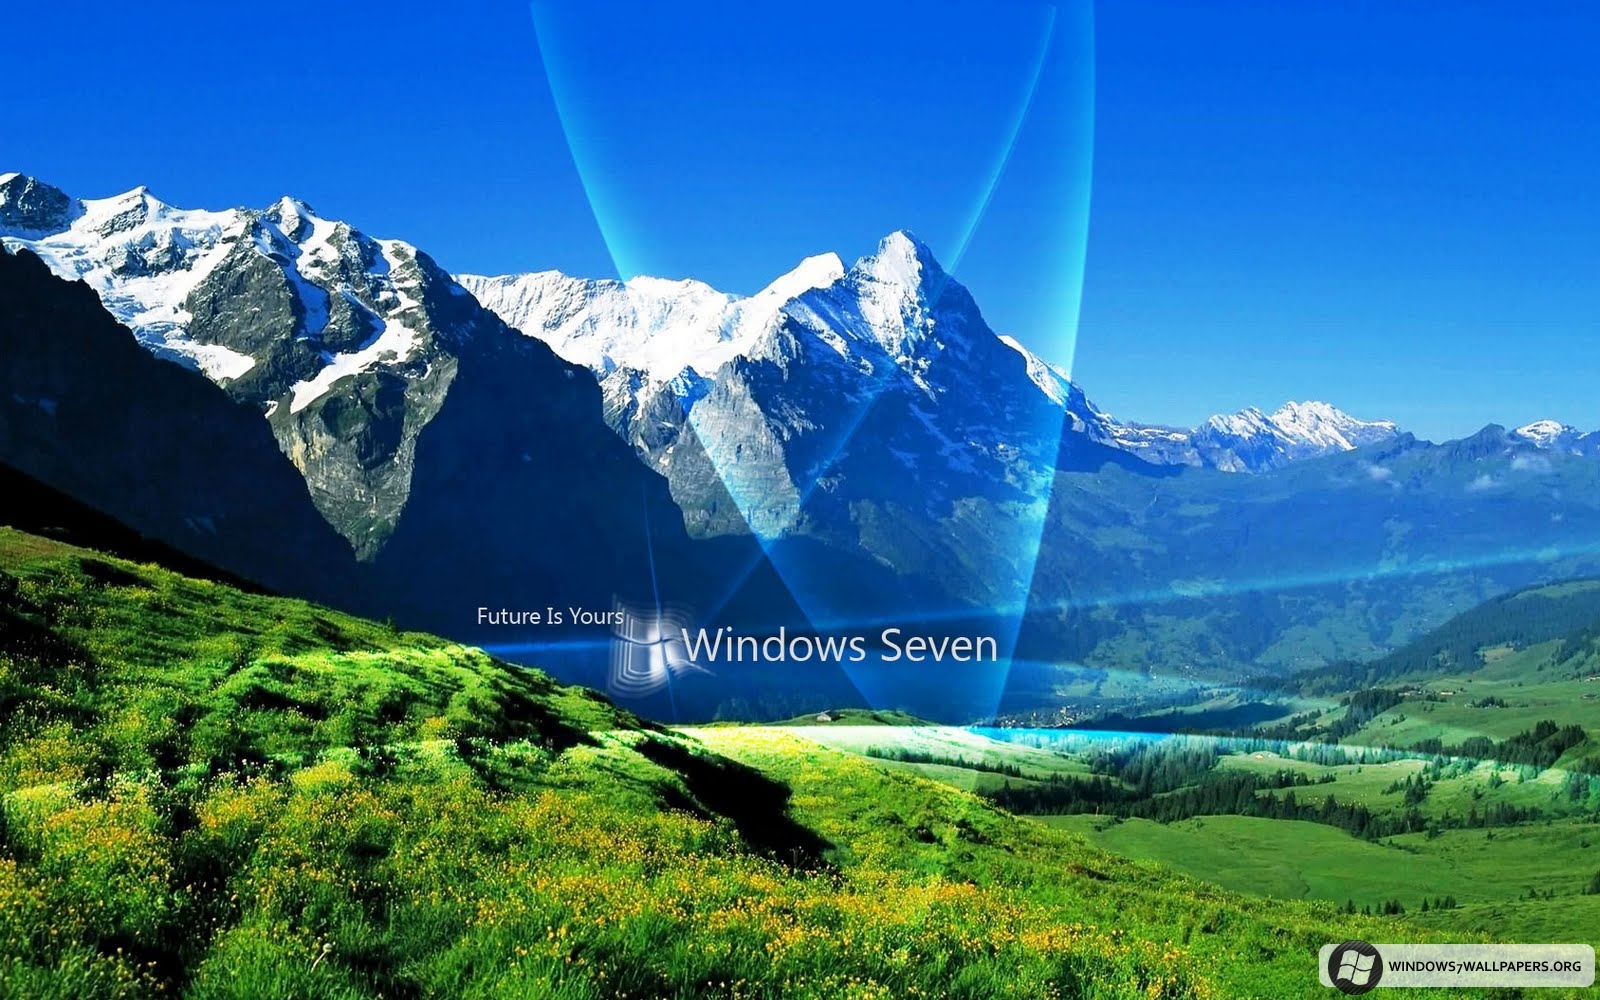 https://blogger.googleusercontent.com/img/b/R29vZ2xl/AVvXsEhGuVvyFi-4oxNmdwZbRjrICkjfP5jmqLINqGebTMIBoWM55GzeTRJKvQ0arUW5WcQk2qWD1Use4kwnRKdGpbK5DHHC25ADOIYJhxQuEYYnRyYyZCxWB12RrG2h74JeM8wLEOPOfD17U28/s1600/Cool-natural-windows7-seven-desktop-wallpaper-1680x1050.jpg